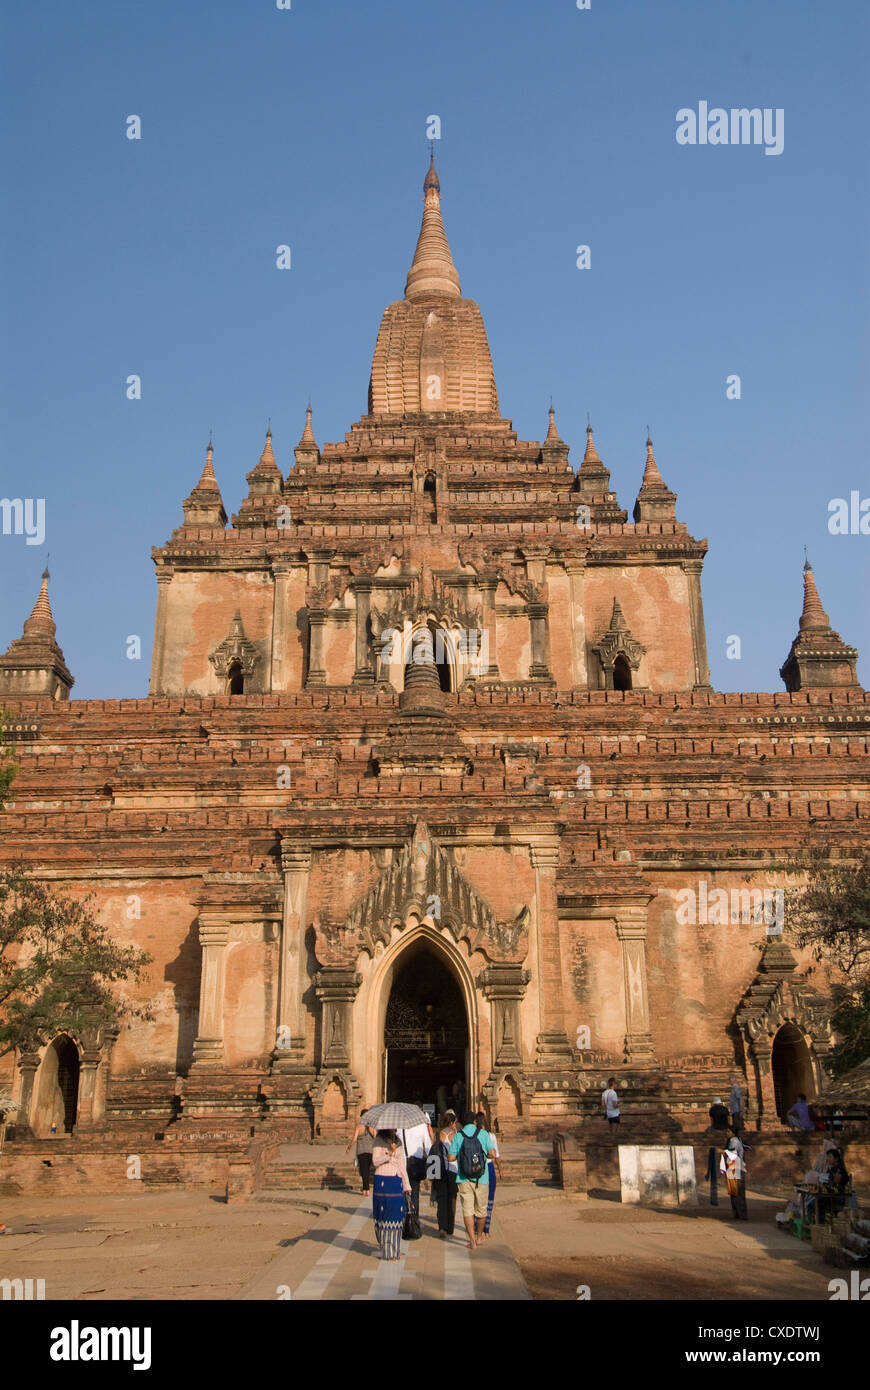 Htilominlo Pahto, Bagan (Pagan), Myanmar (Burma), Asia Stock Photo